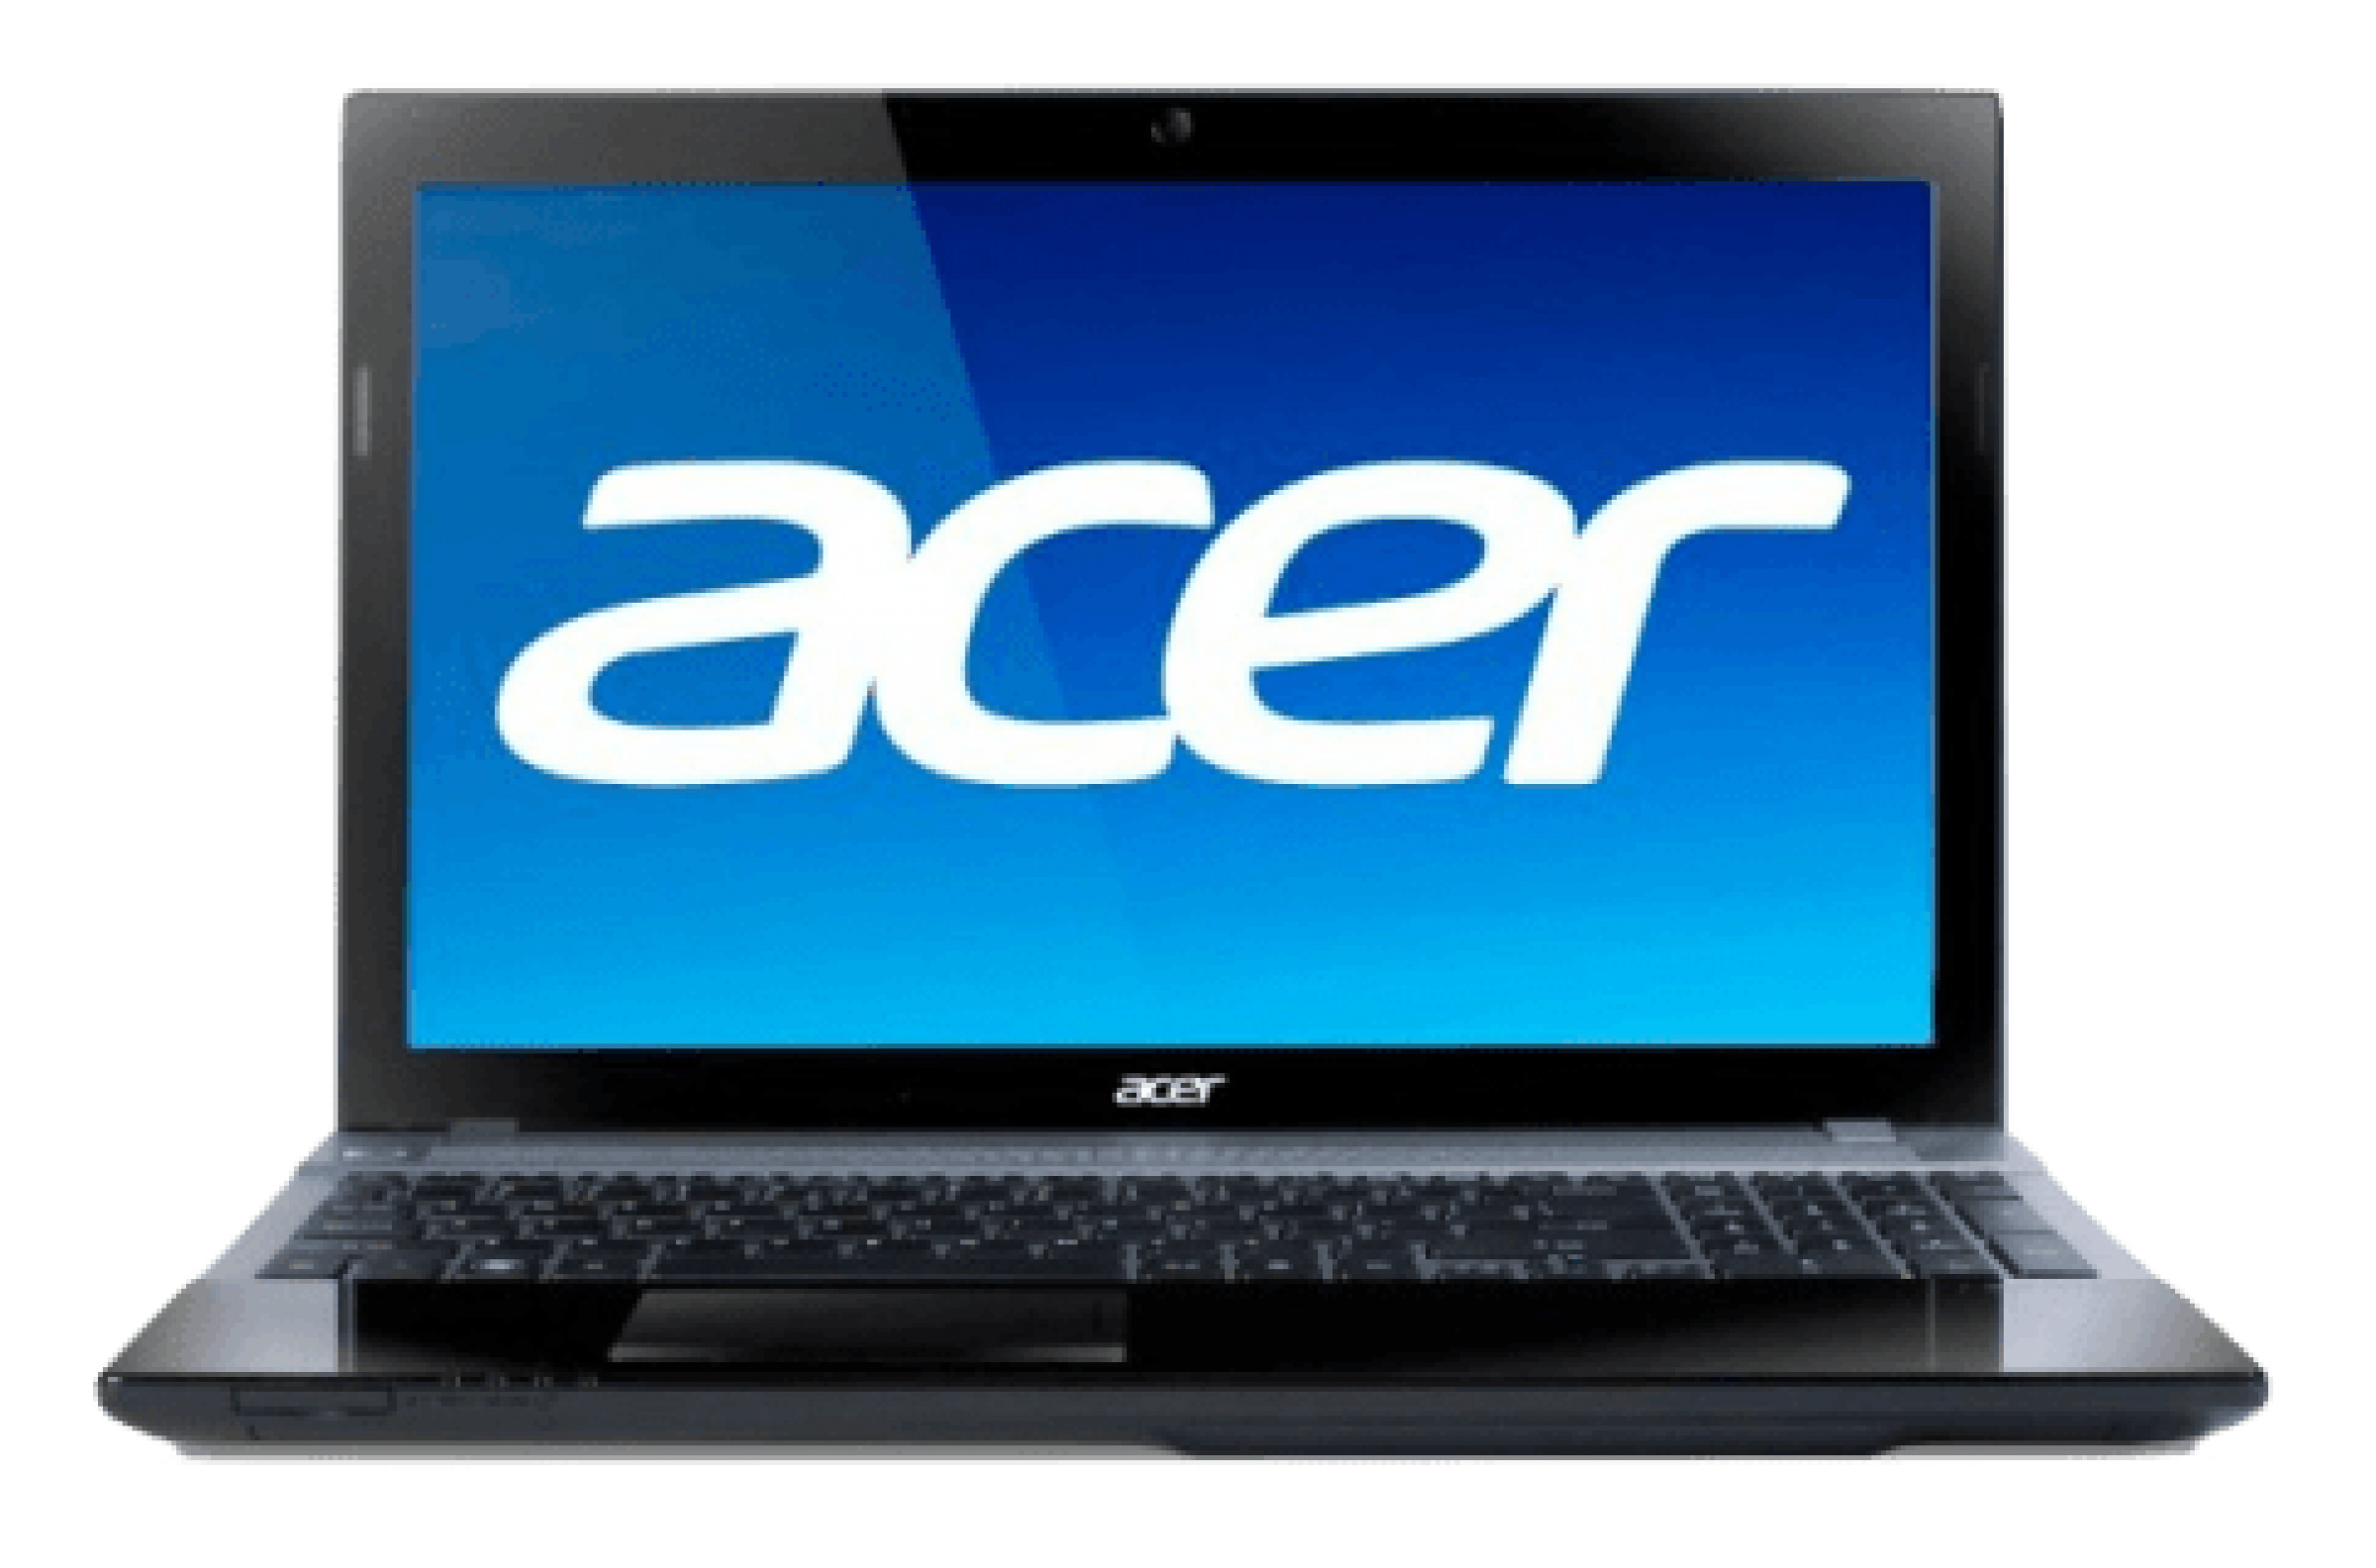 Acer Desktop PC and Laptop Computers